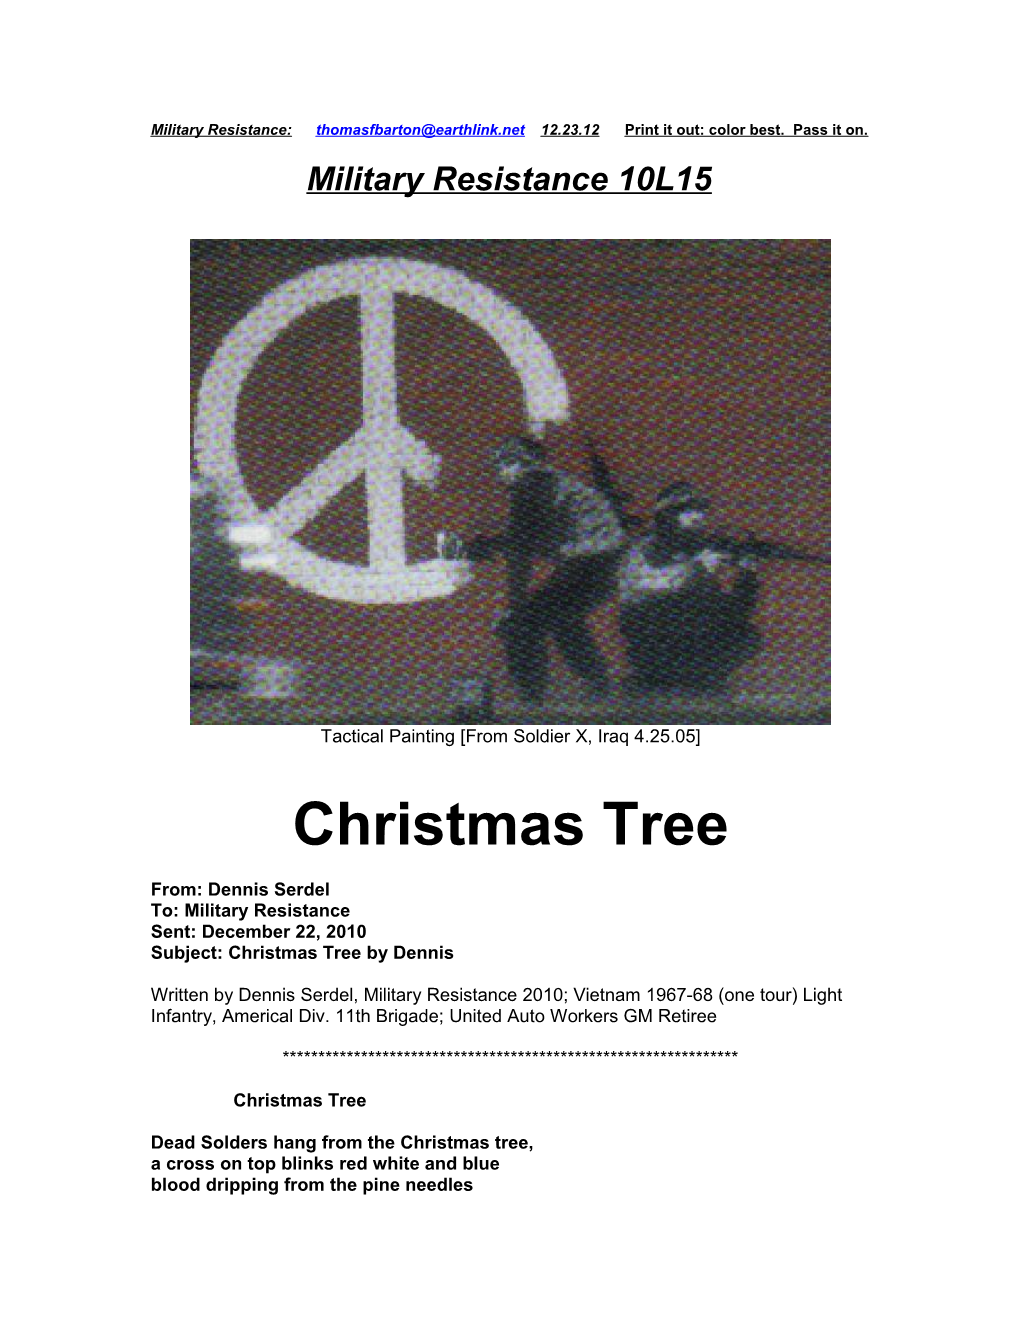 Military Resistance 10L15